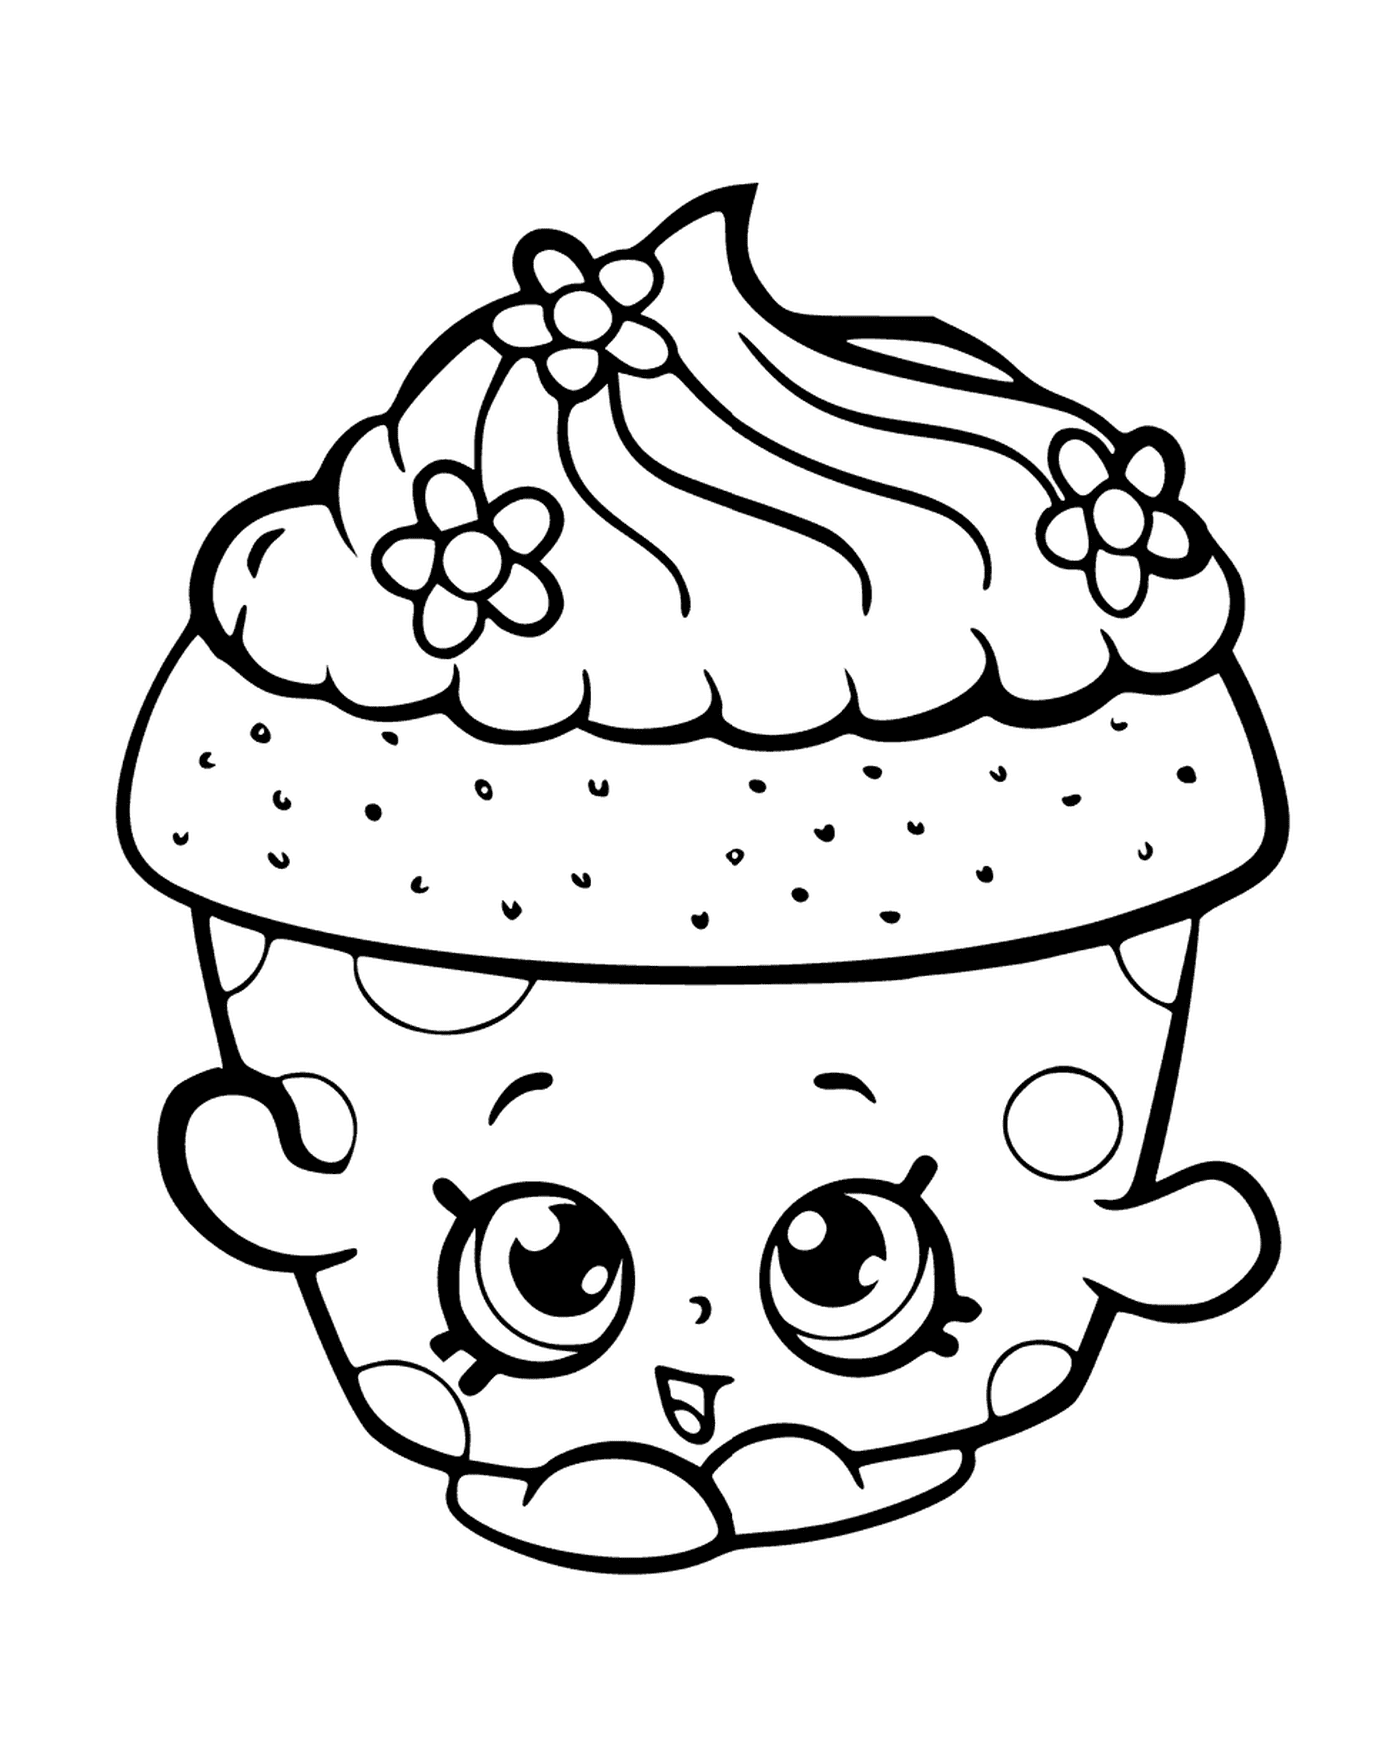  Shopkin's Cupcake Petal 